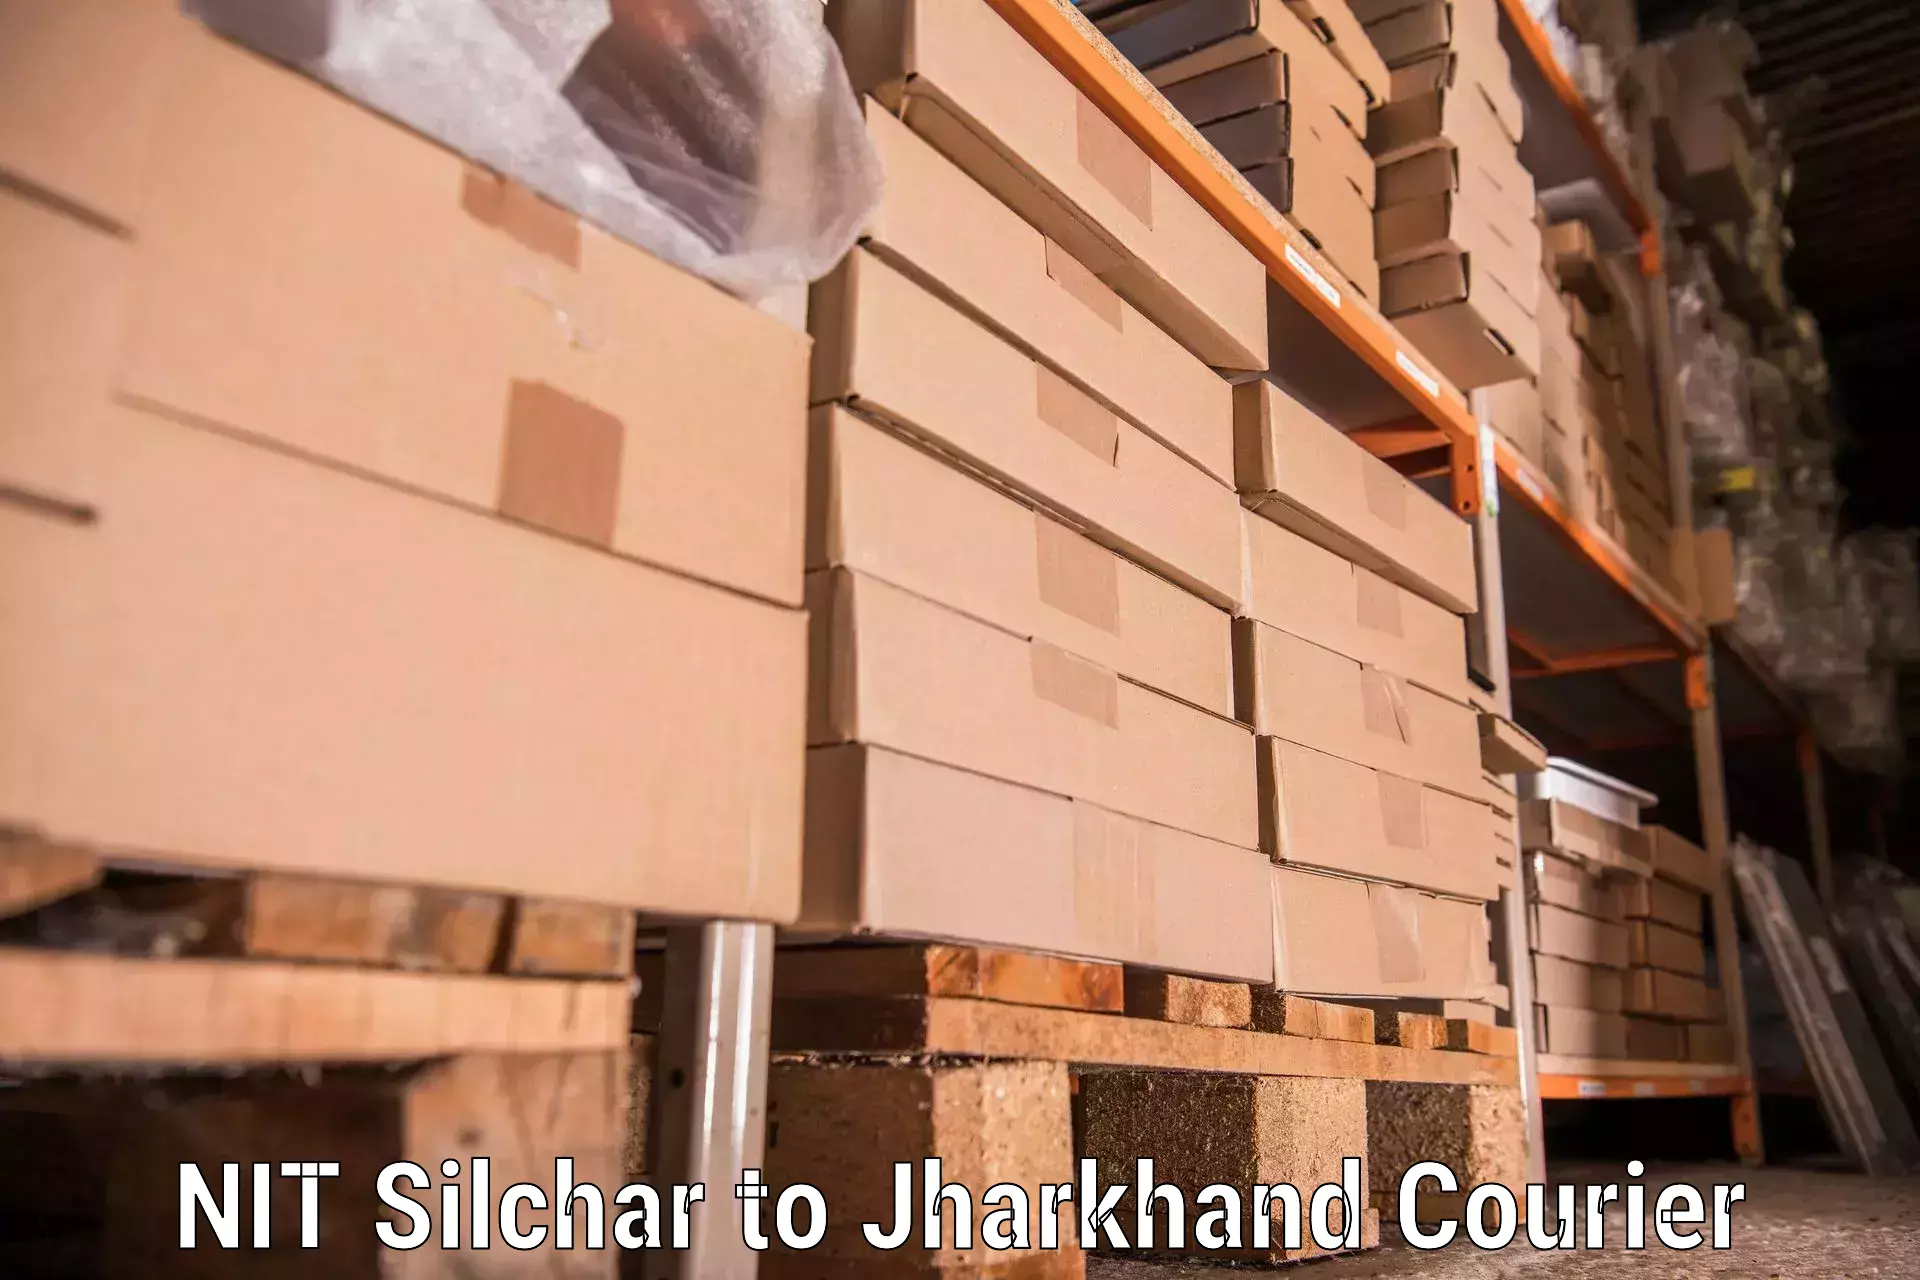 Quality moving and storage NIT Silchar to Sahibganj